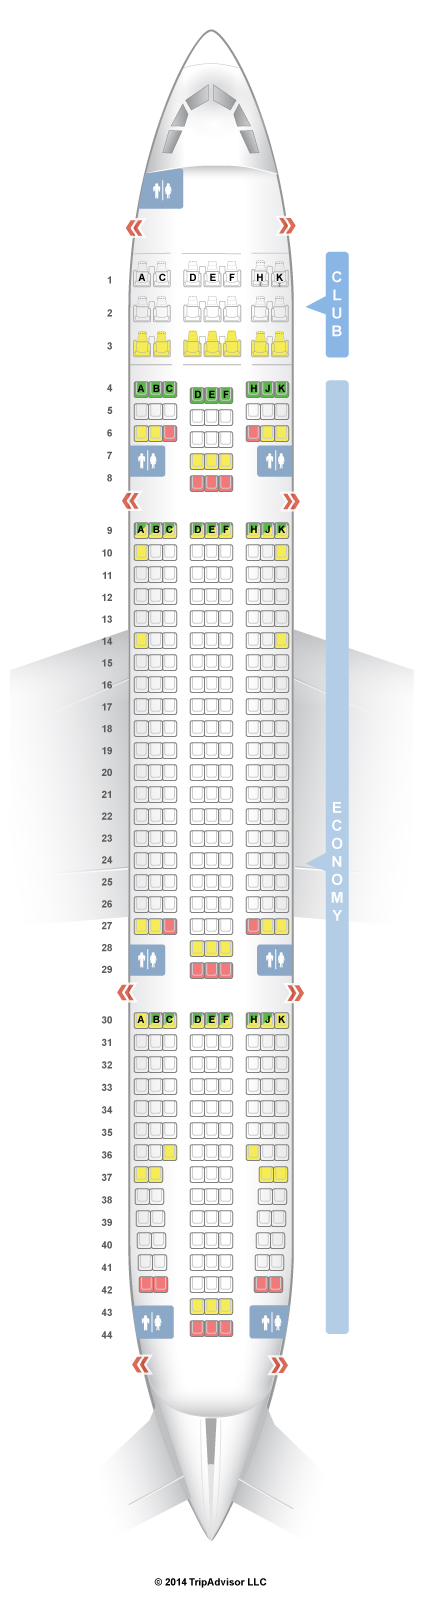 Airbus A330 200 Seating Chart Air Transat